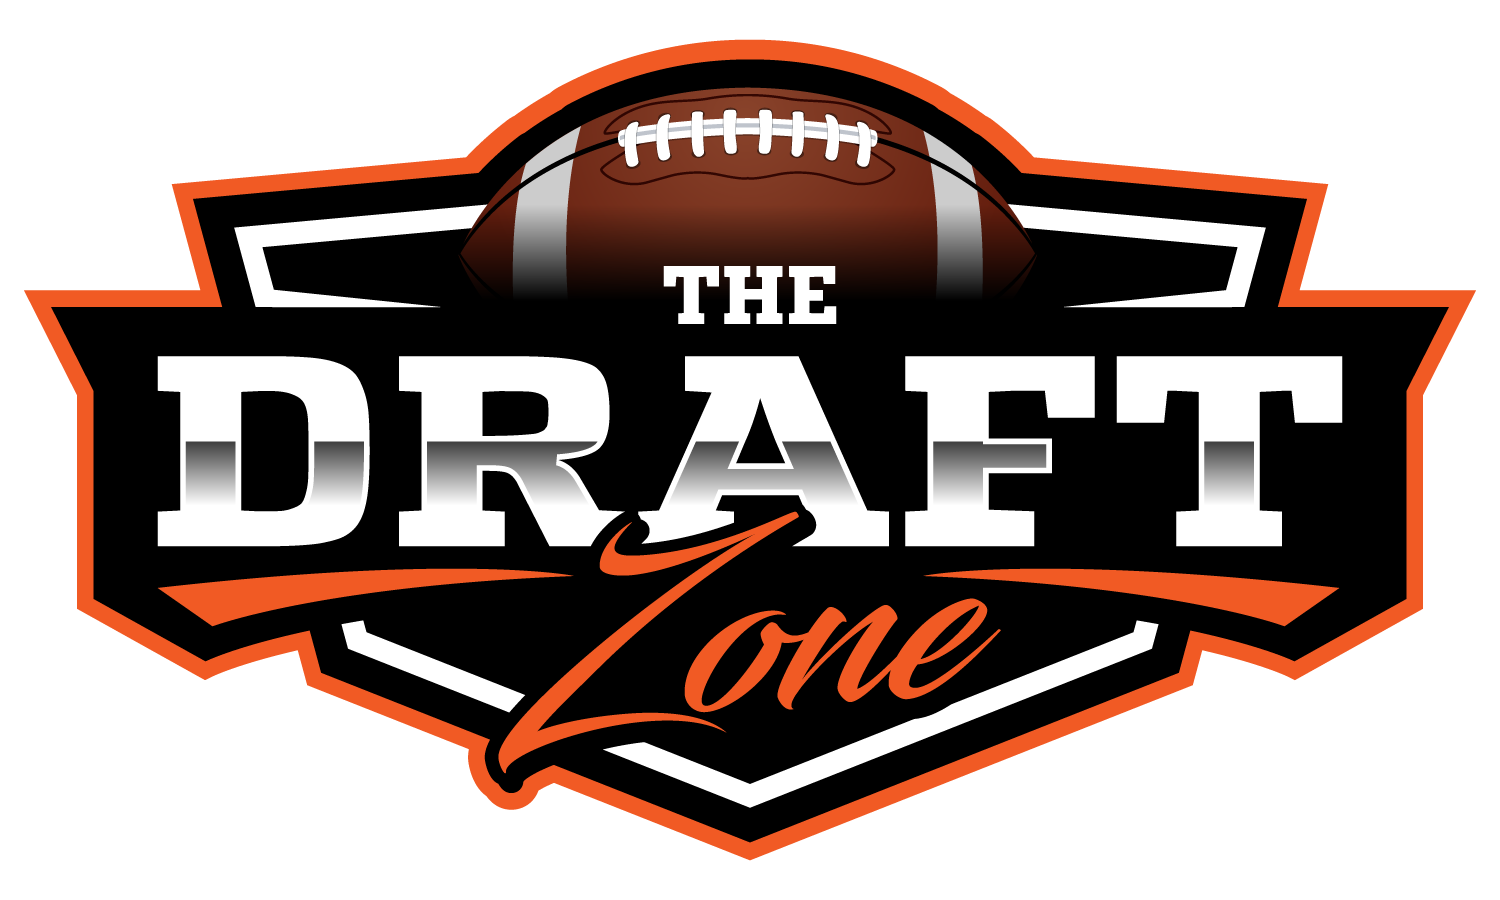 the draft zone